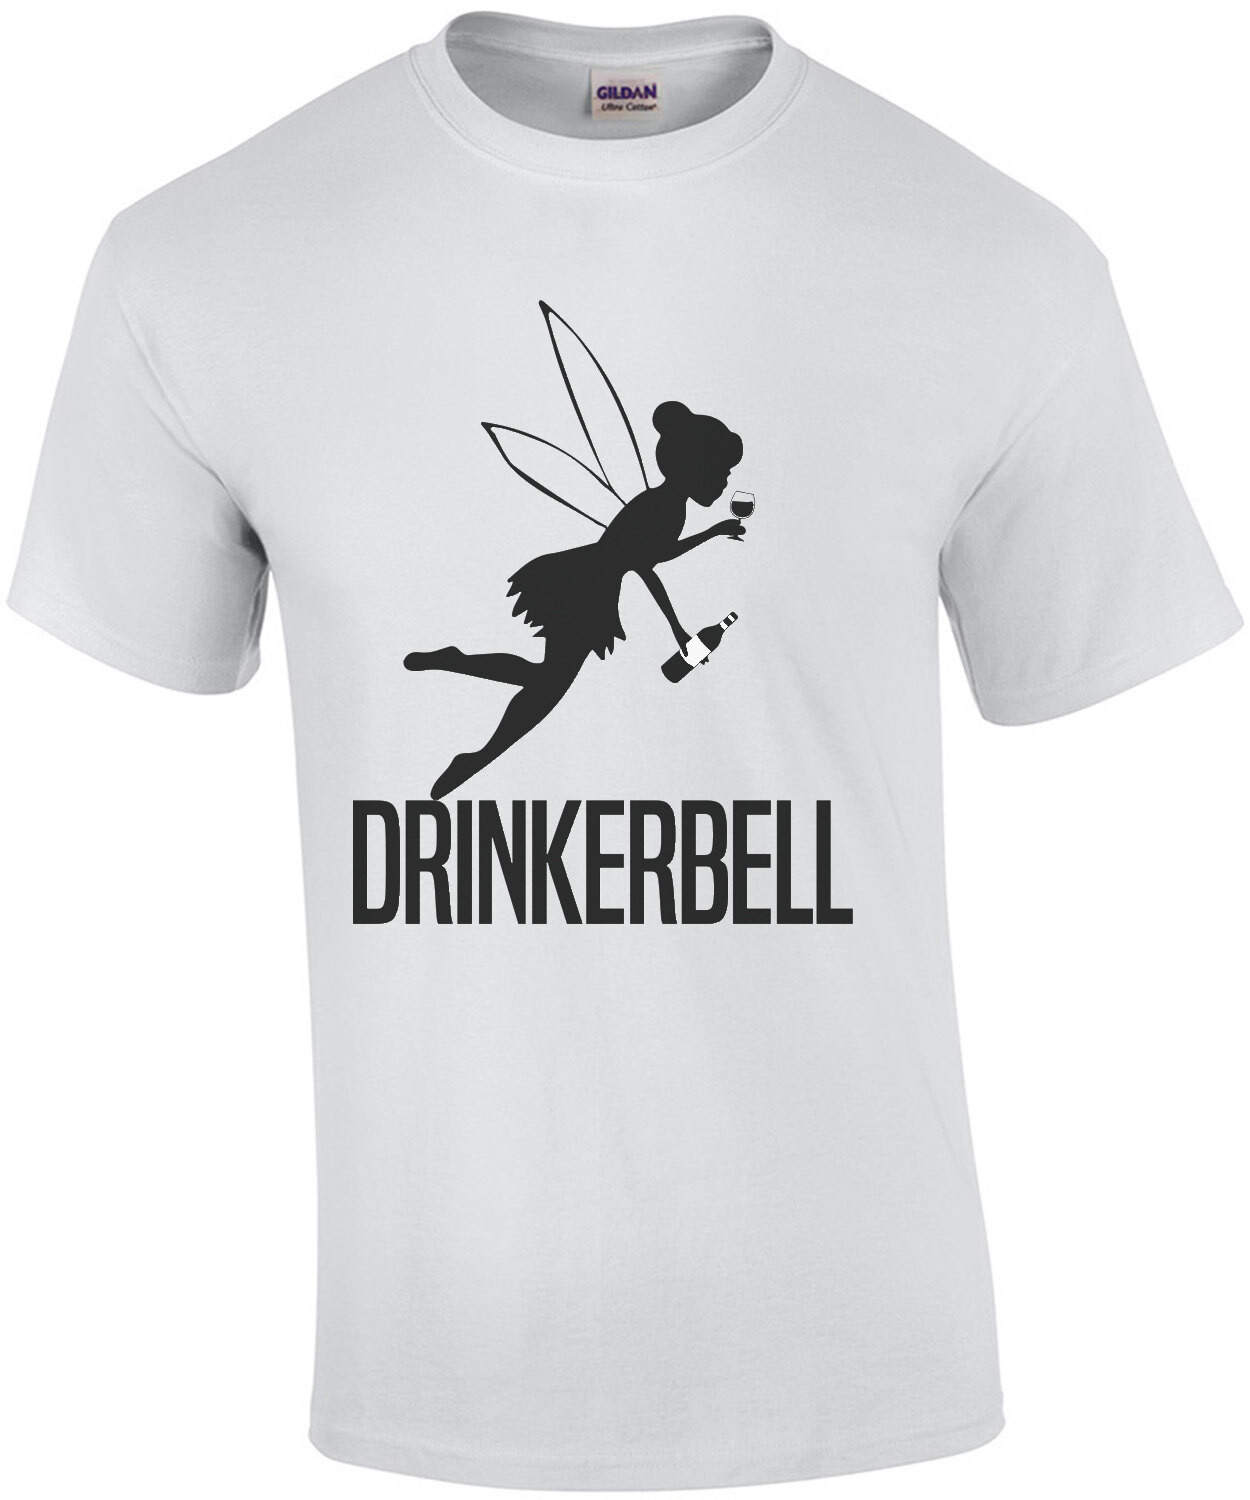 Drinkerbell - funny drinking tinkerbell parody wine t-shirt